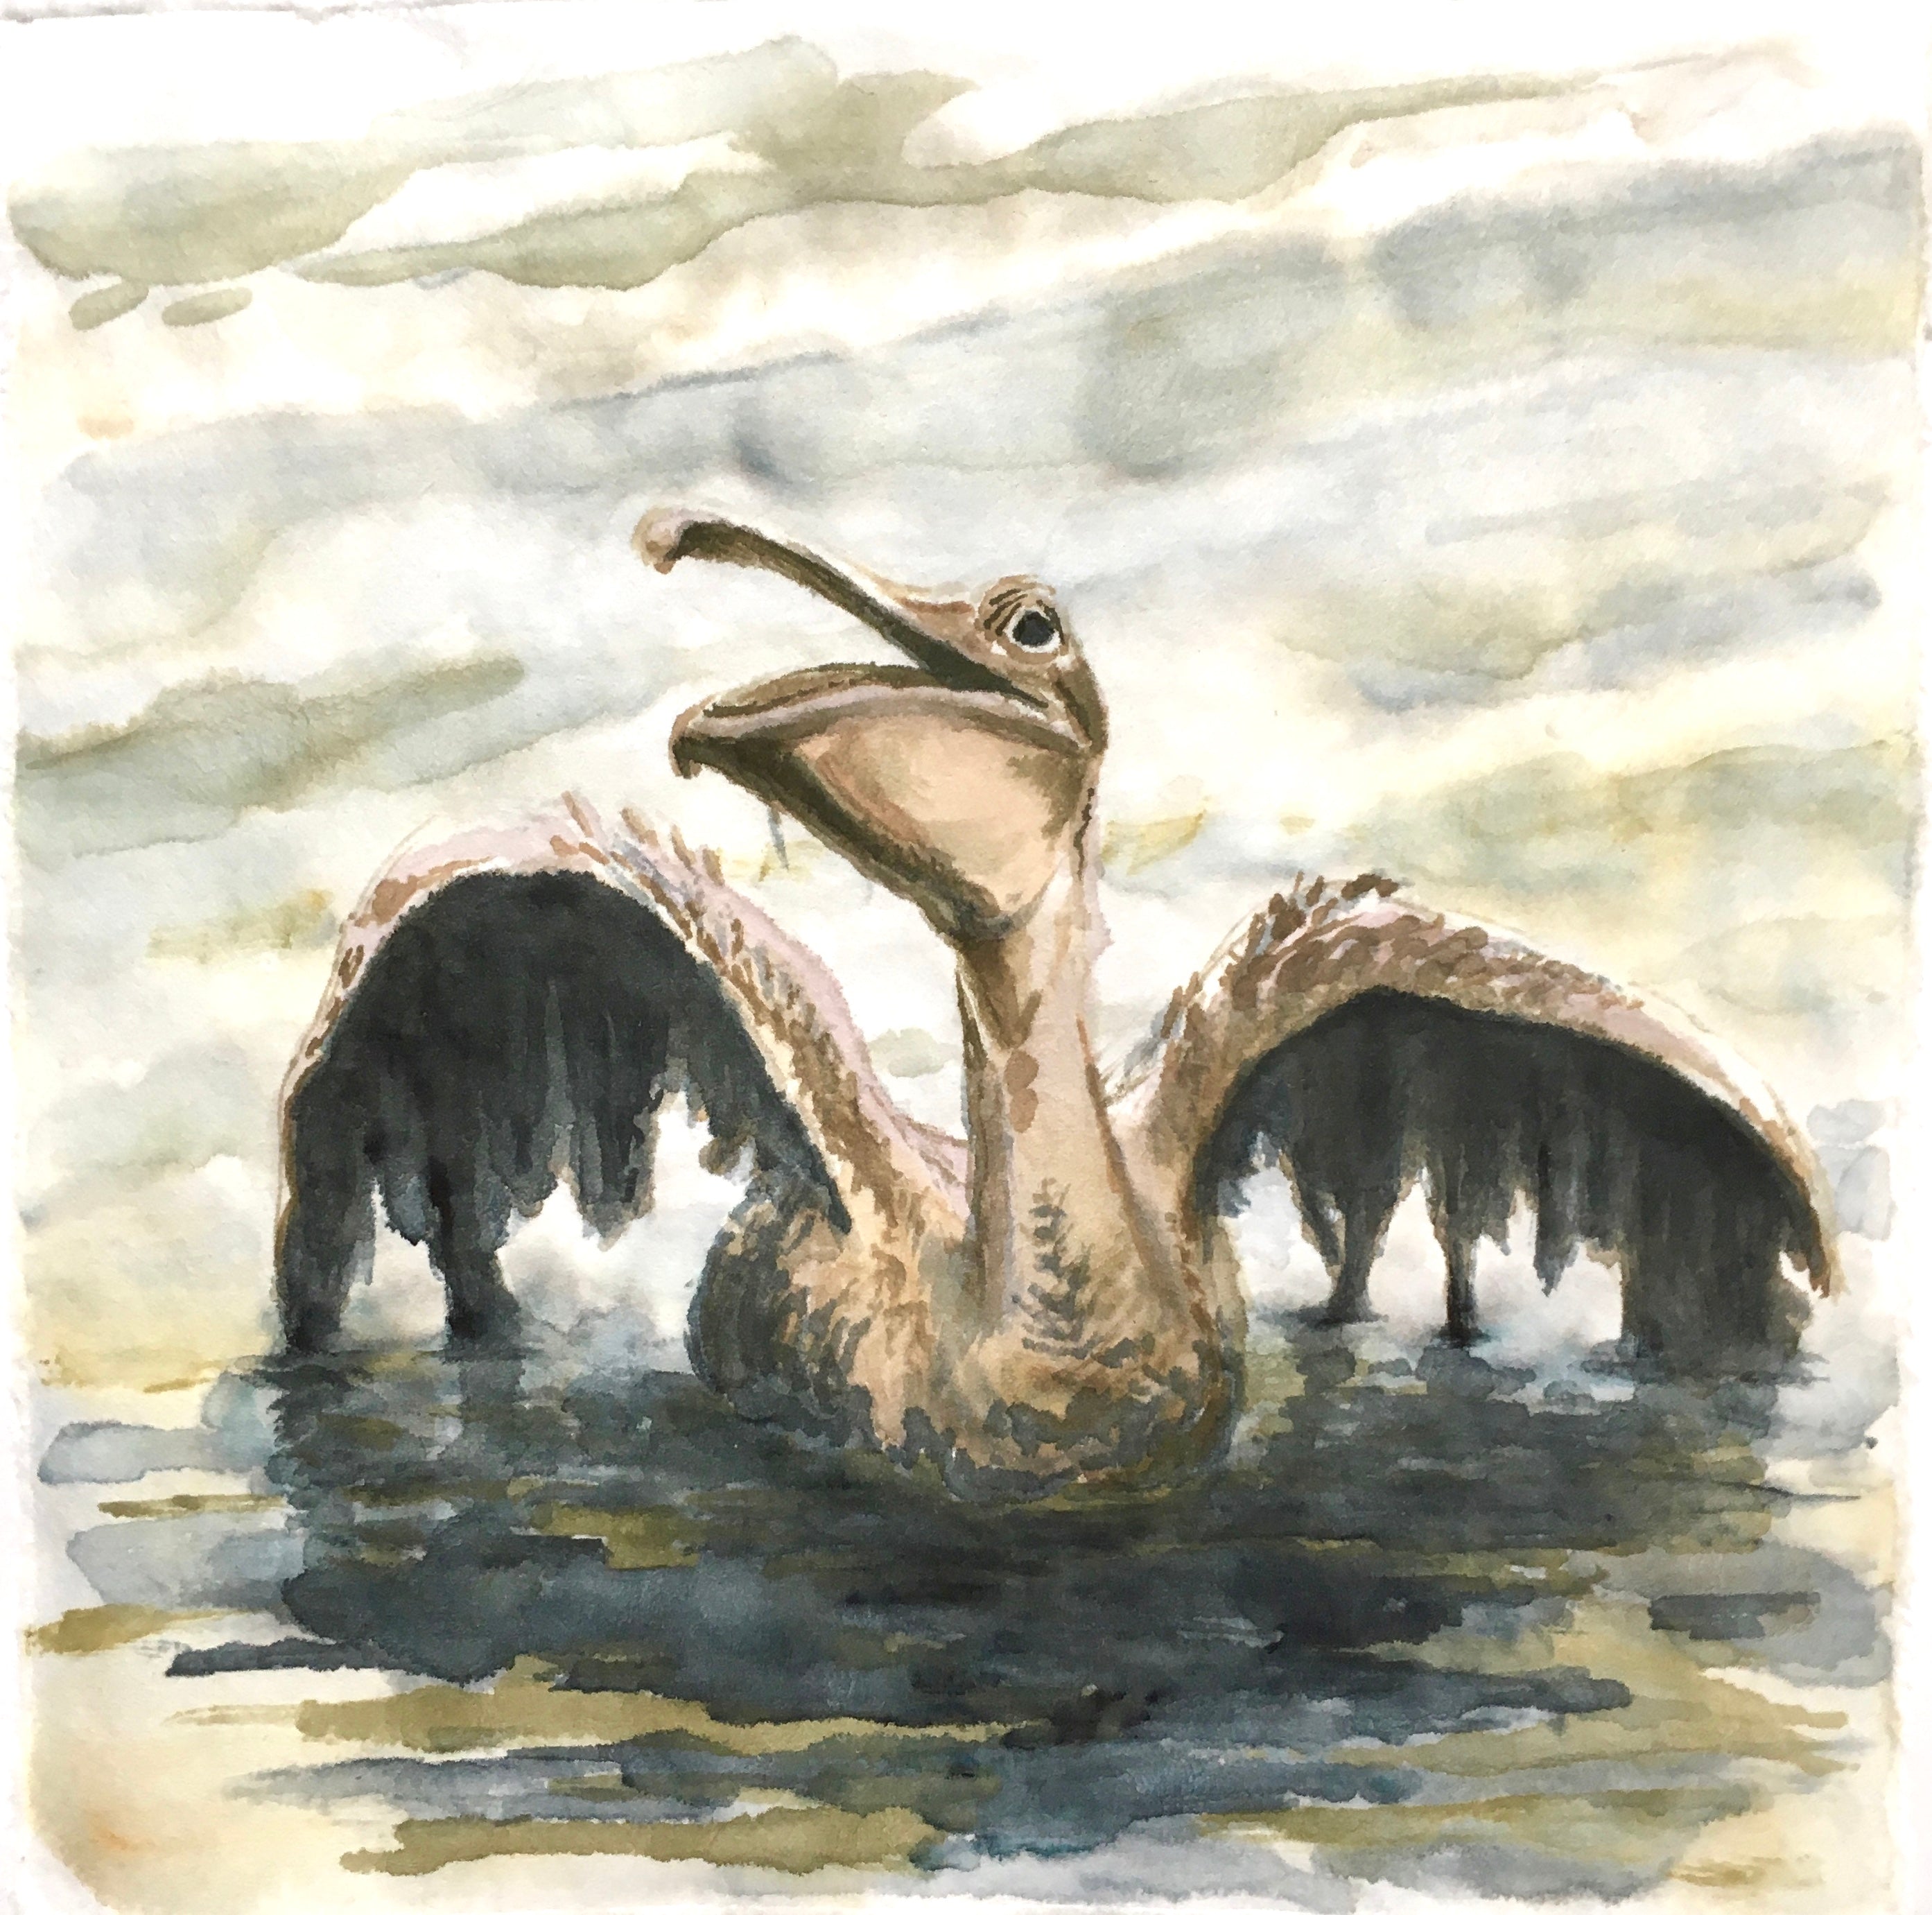 The Earth Speaks series, 2017 - Distressed Pelican, 21cm x 21cm